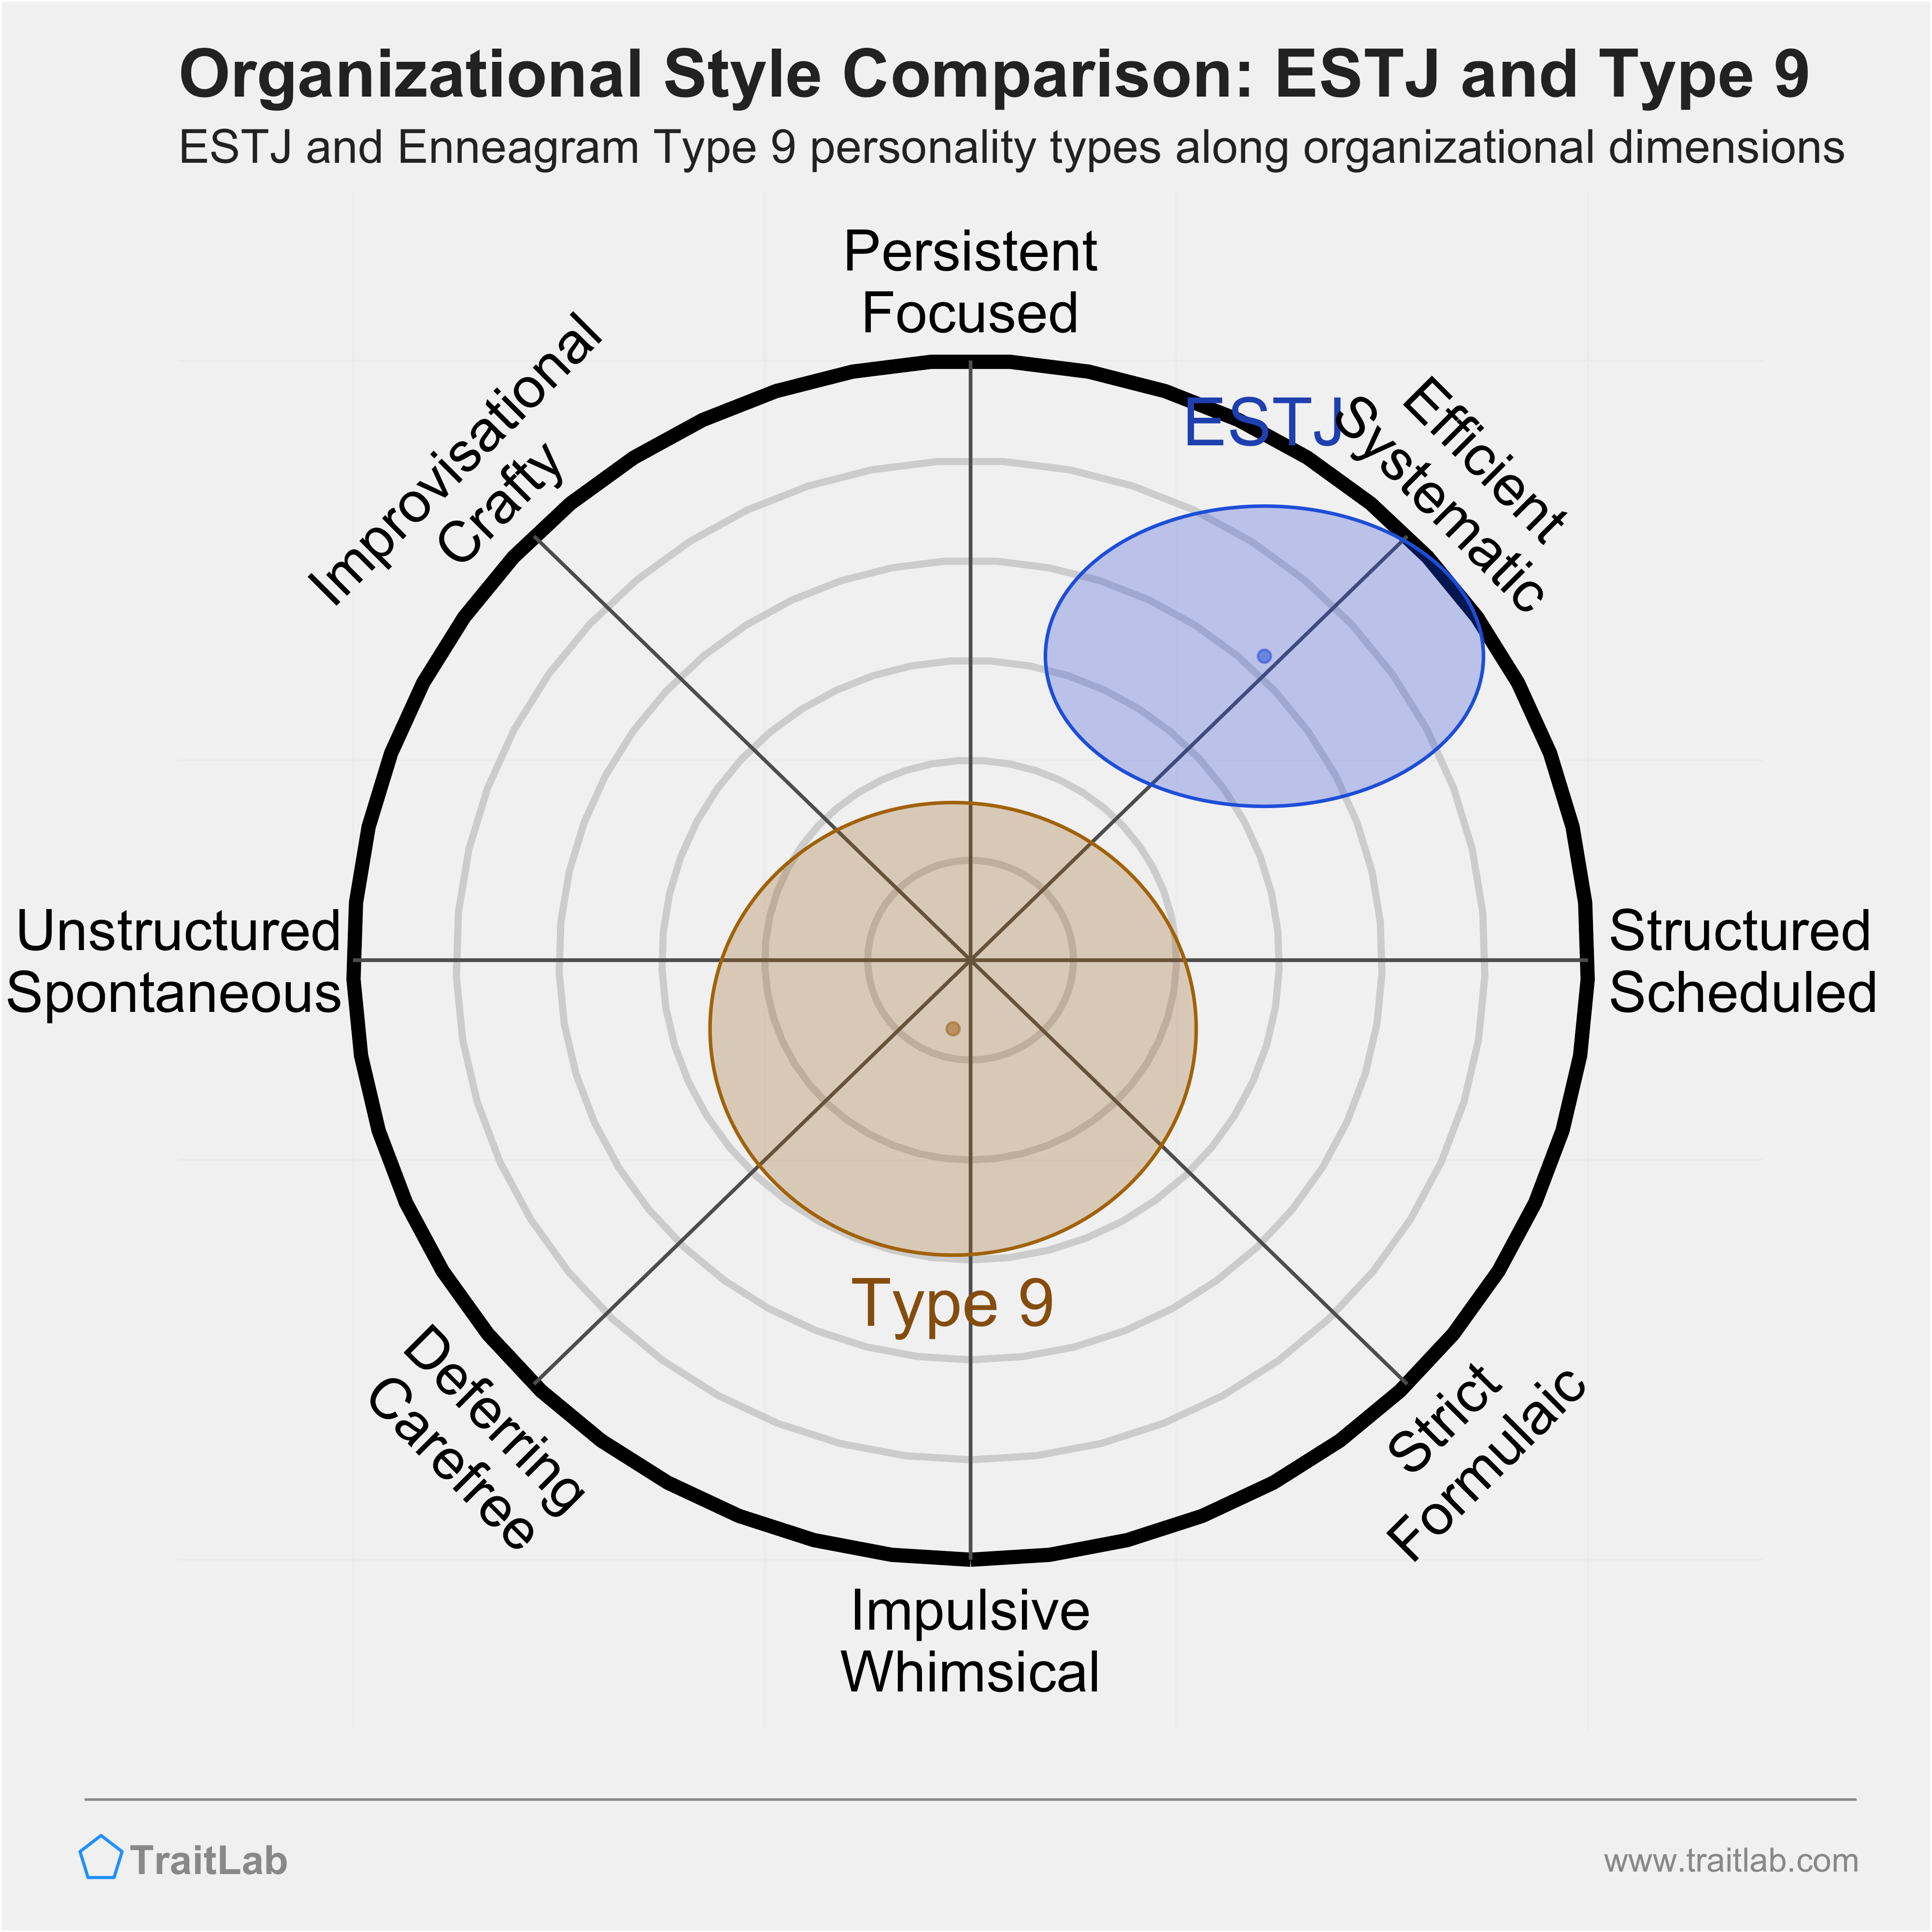 ESTJ and Type 9 comparison across organizational dimensions